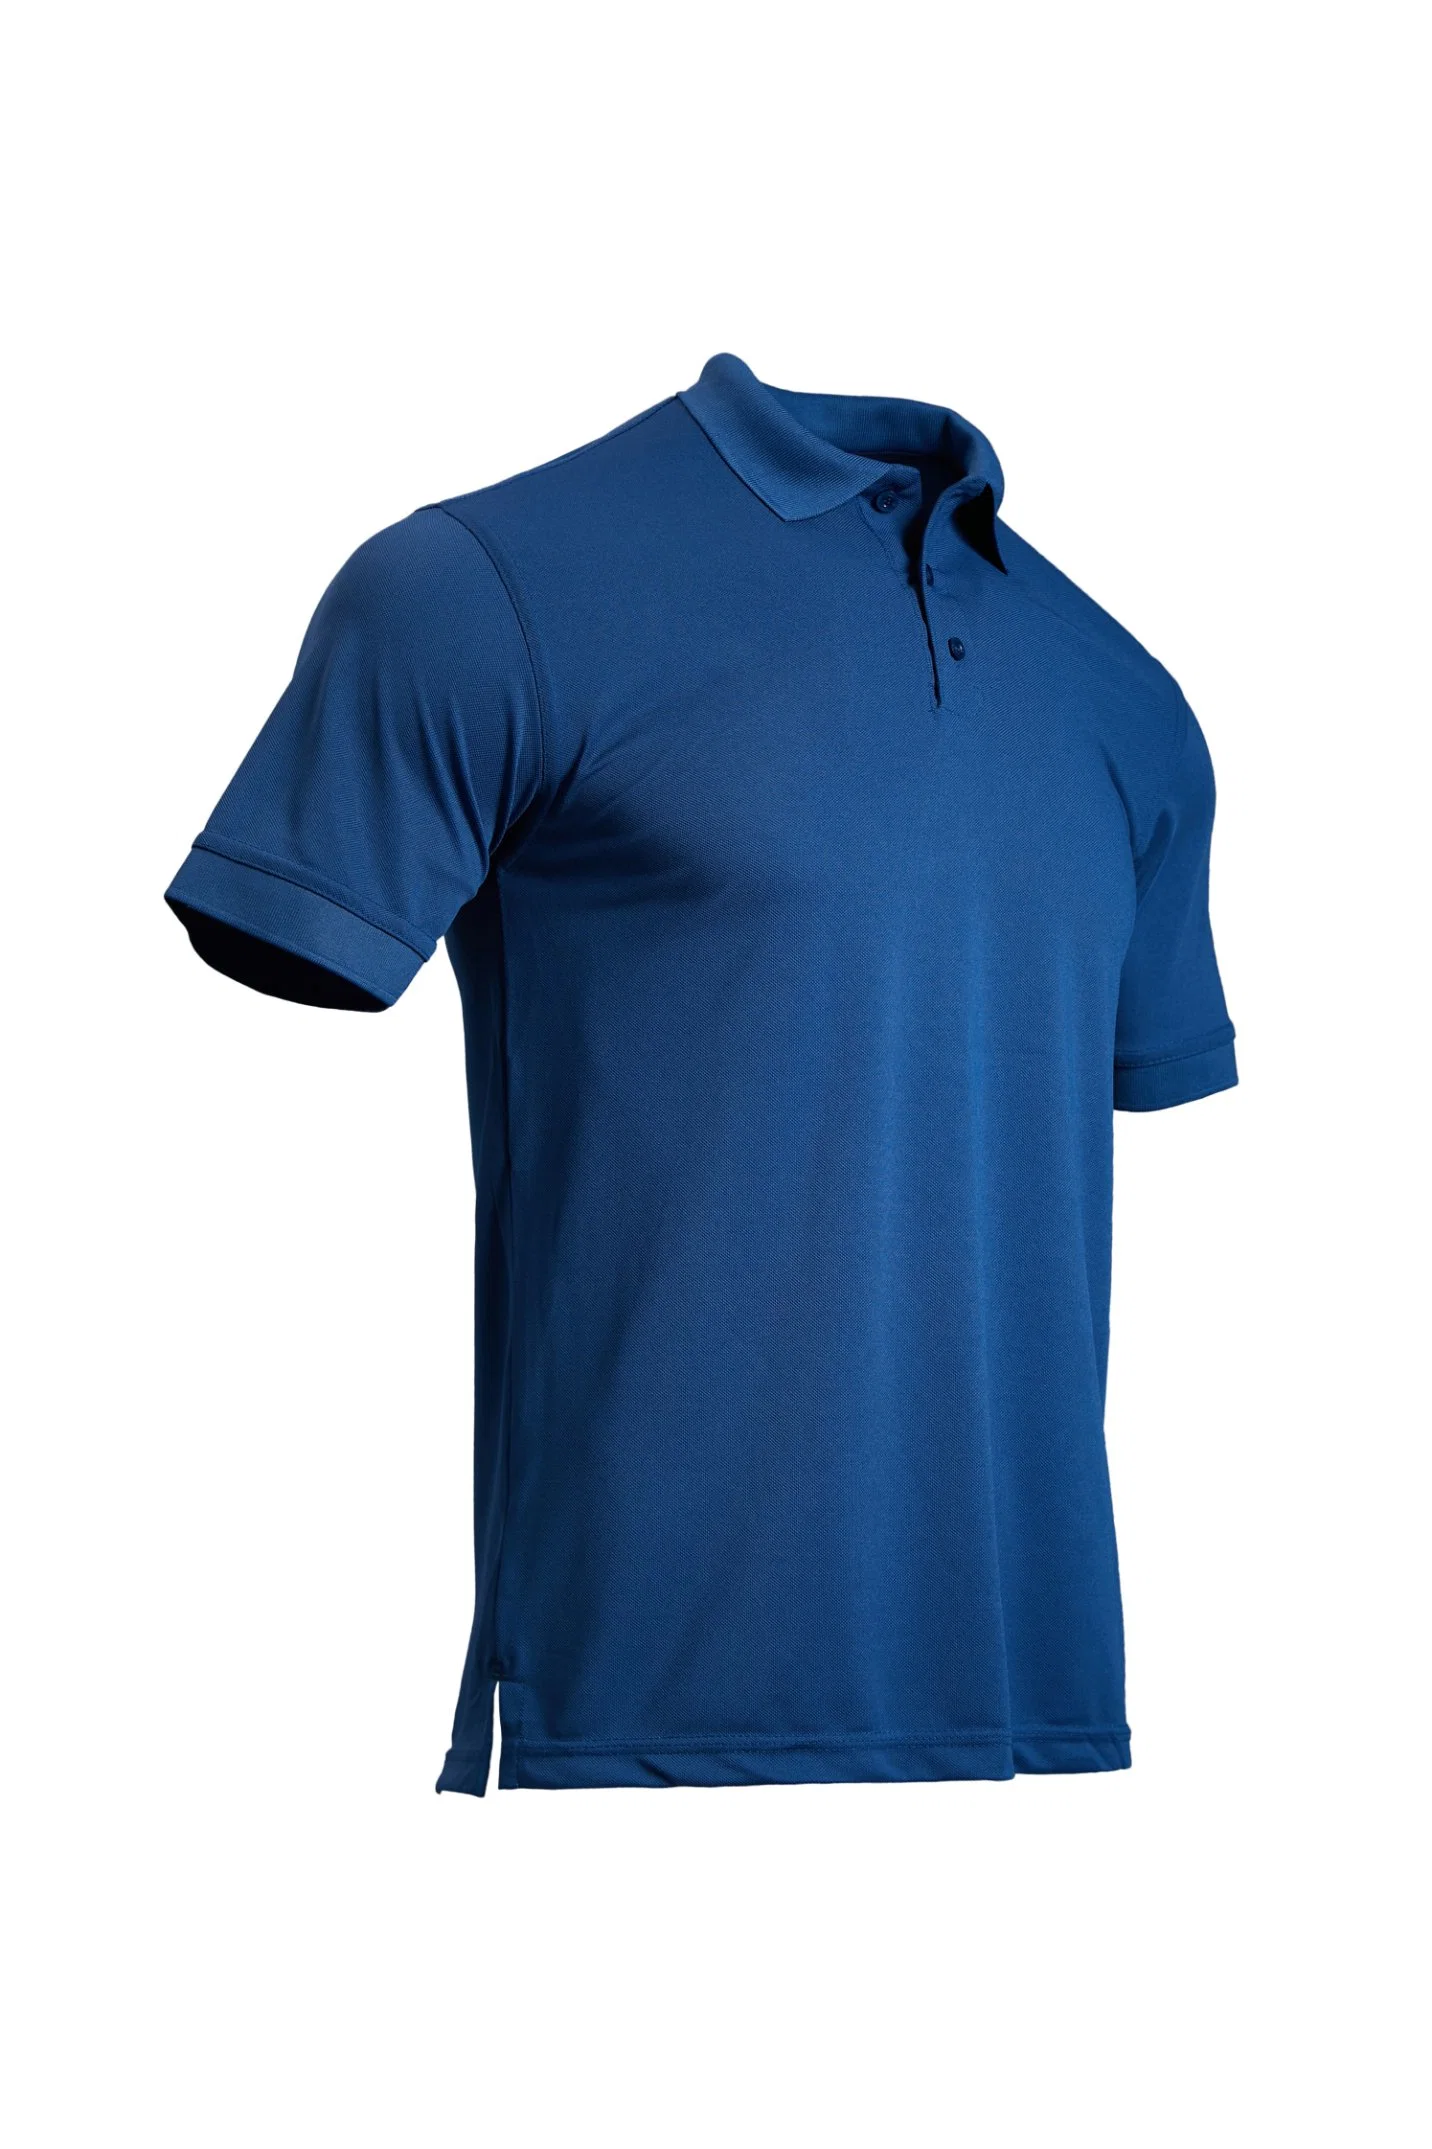 Männer Casual Poloshirt mit drei Linien genäht Design Saum Kleidung